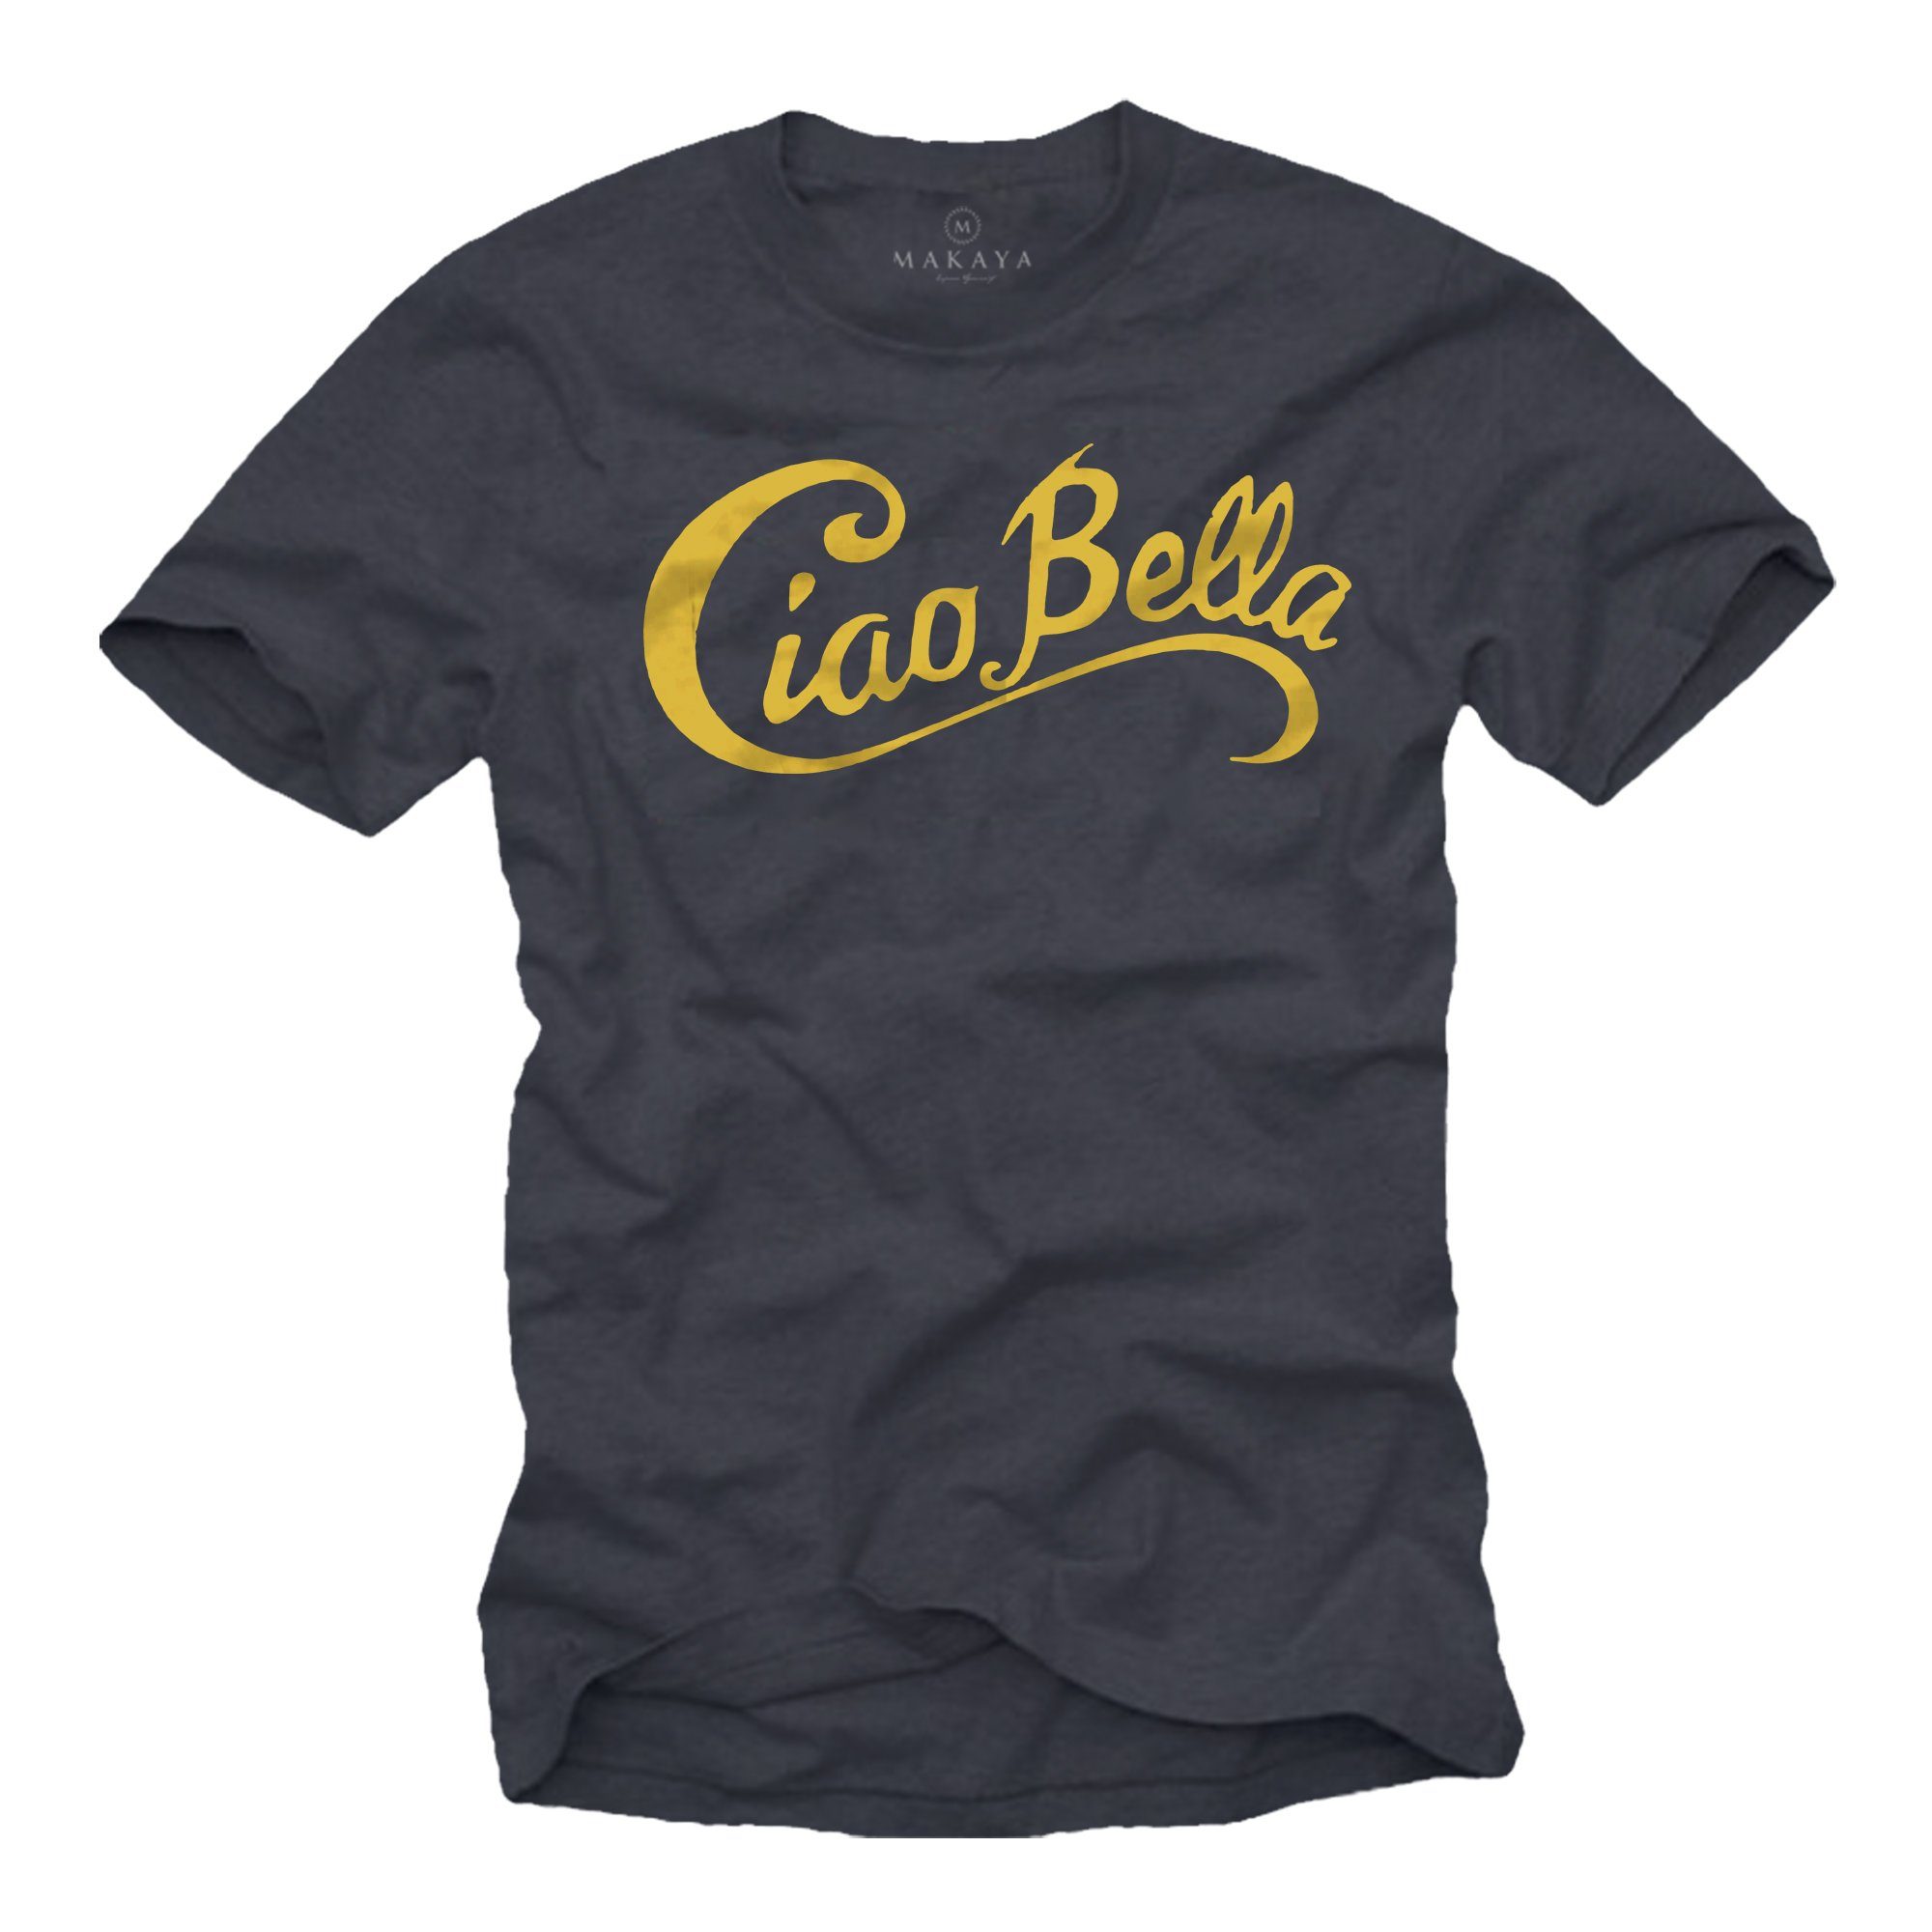 MAKAYA Print-Shirt Style Herren Italien Mode Logo, Bella Motiv Italienischer Ciao Spruch Coole Blaugrau